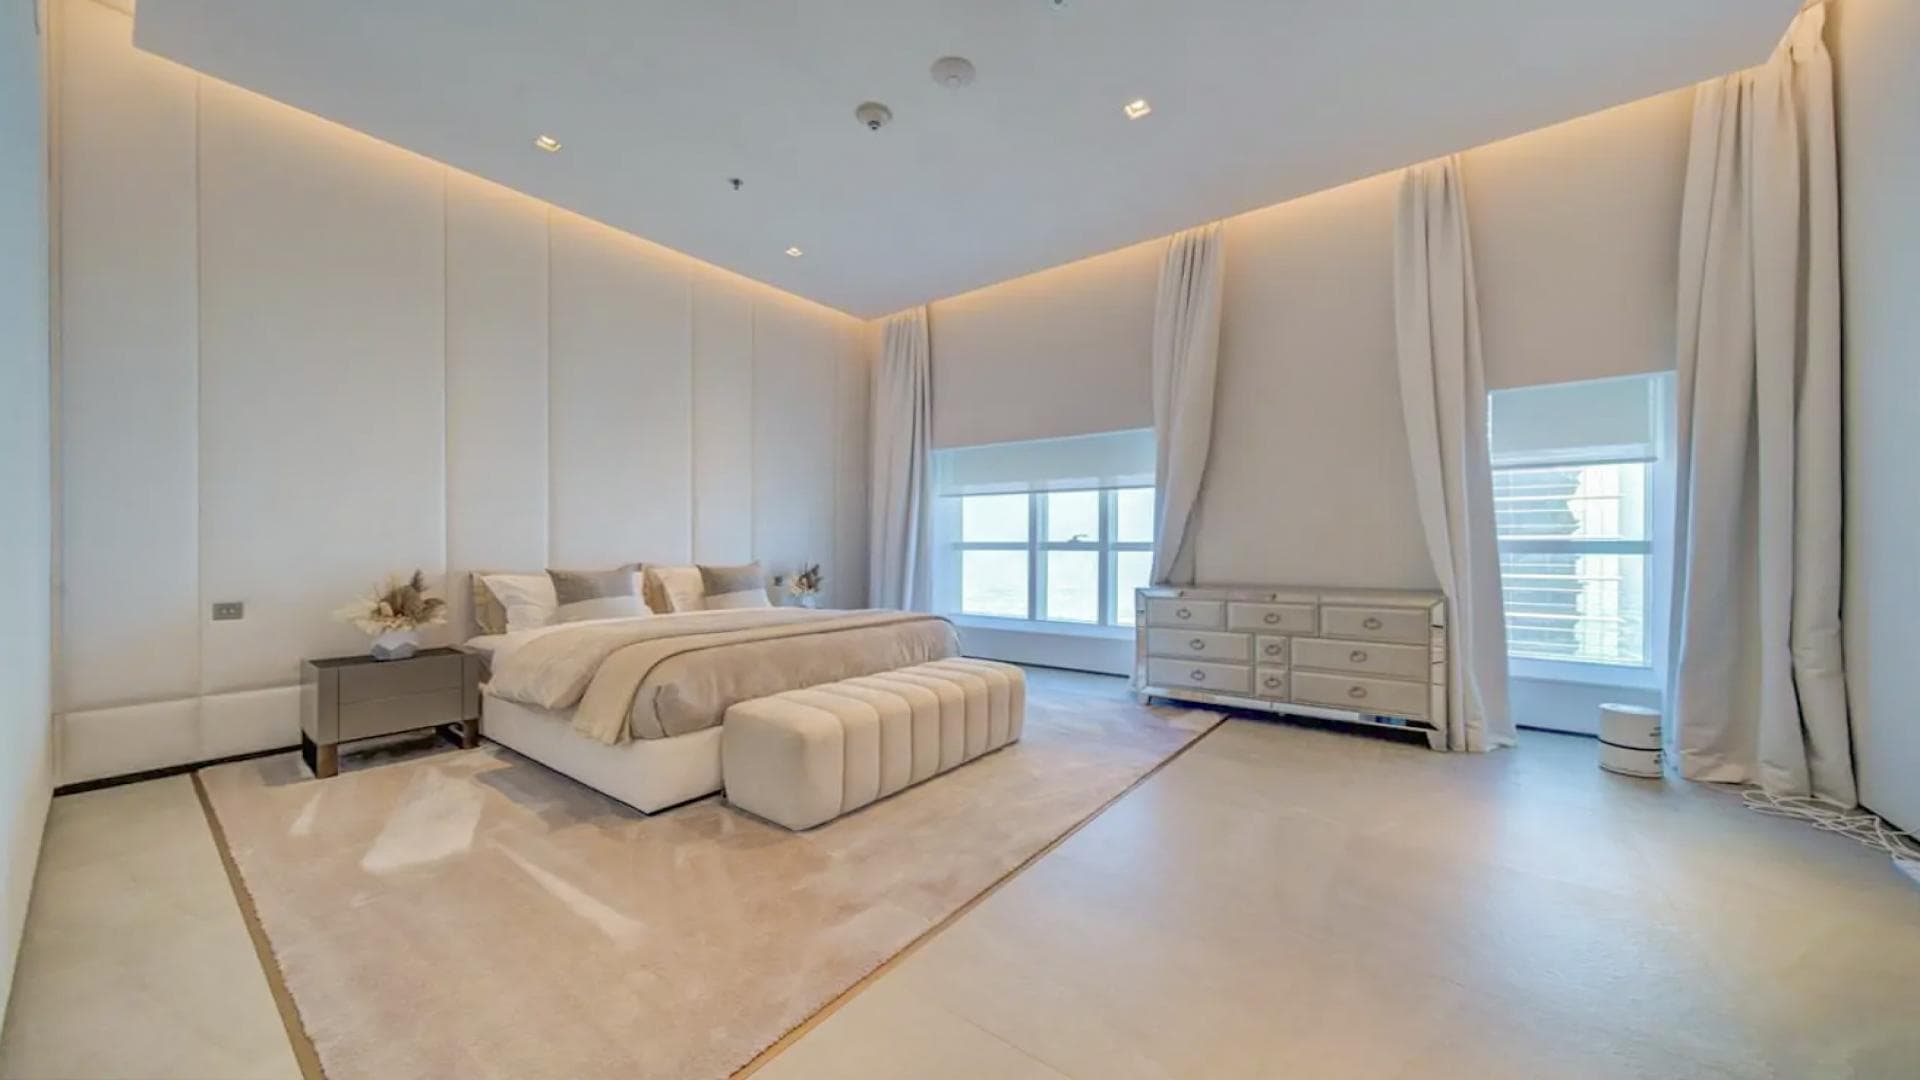 4 Bedroom Penthouse For Sale Elite Residence Lp15828 1c38f7461beb6100.jpg